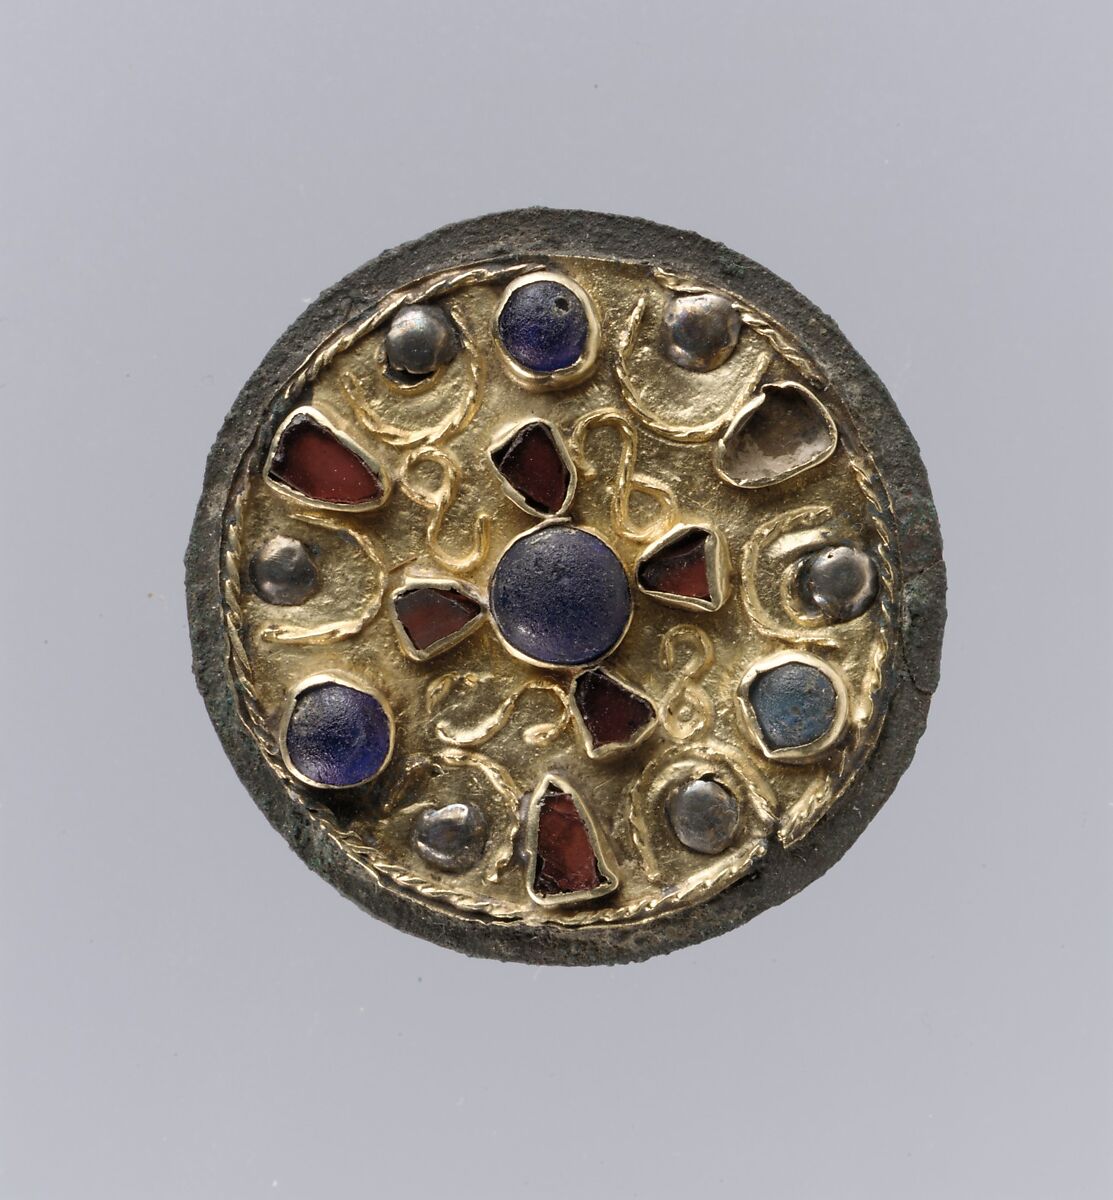 Disk Brooch, Gold, filigree, garnets, blue glass; copper alloy support, Frankish 